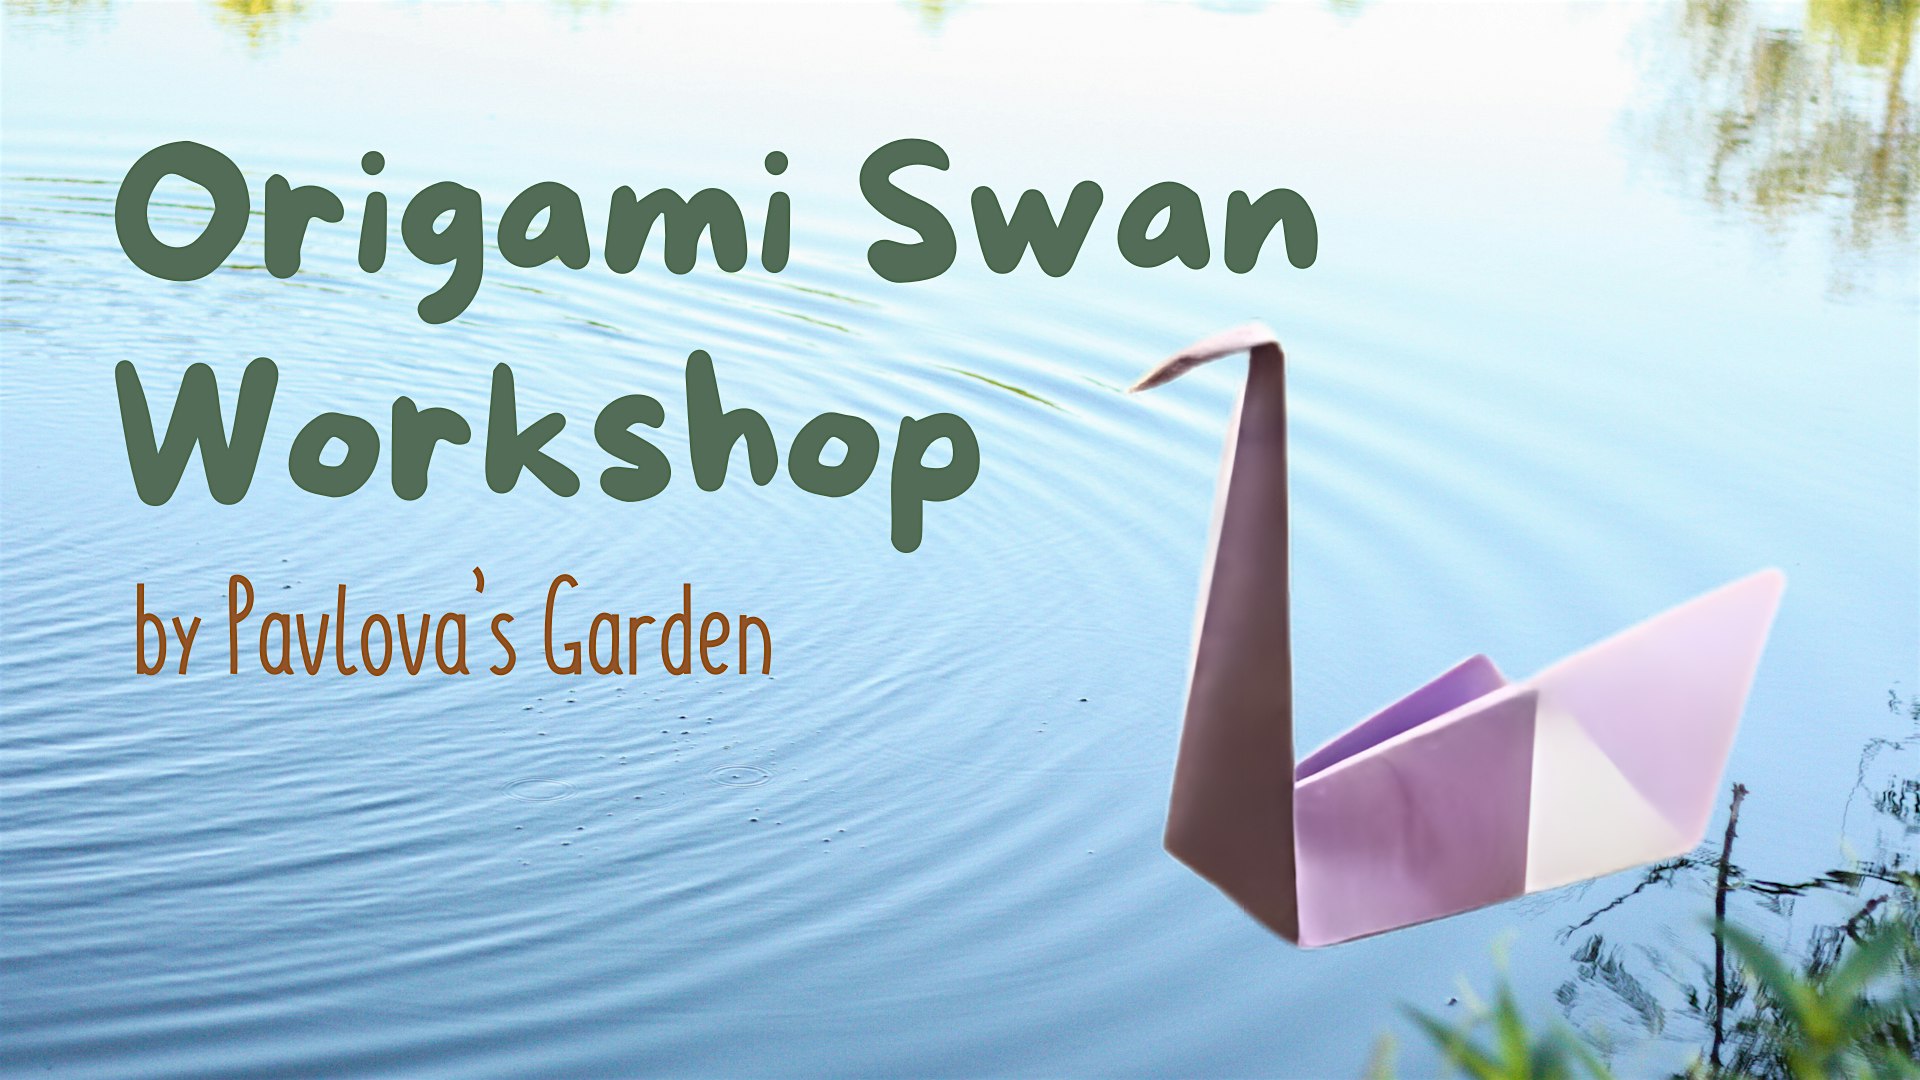 Origami Crane Workshop